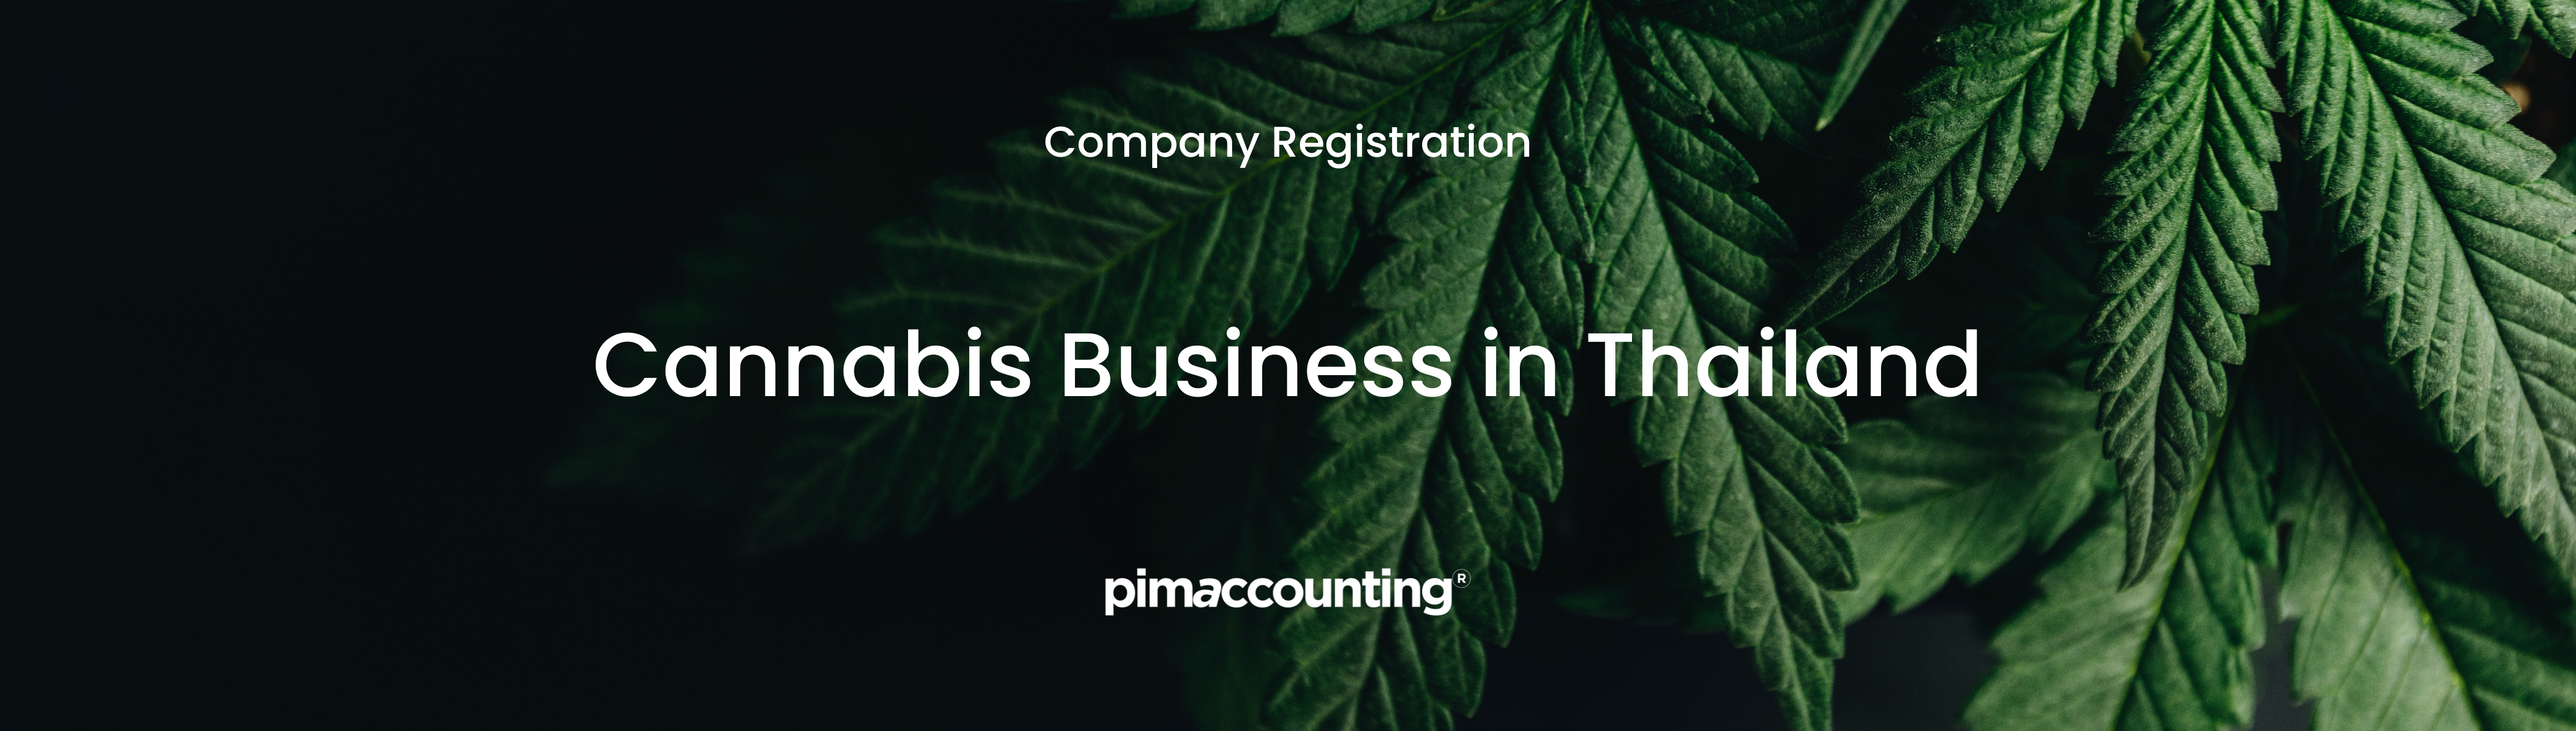 Cannabis Business in Thailand